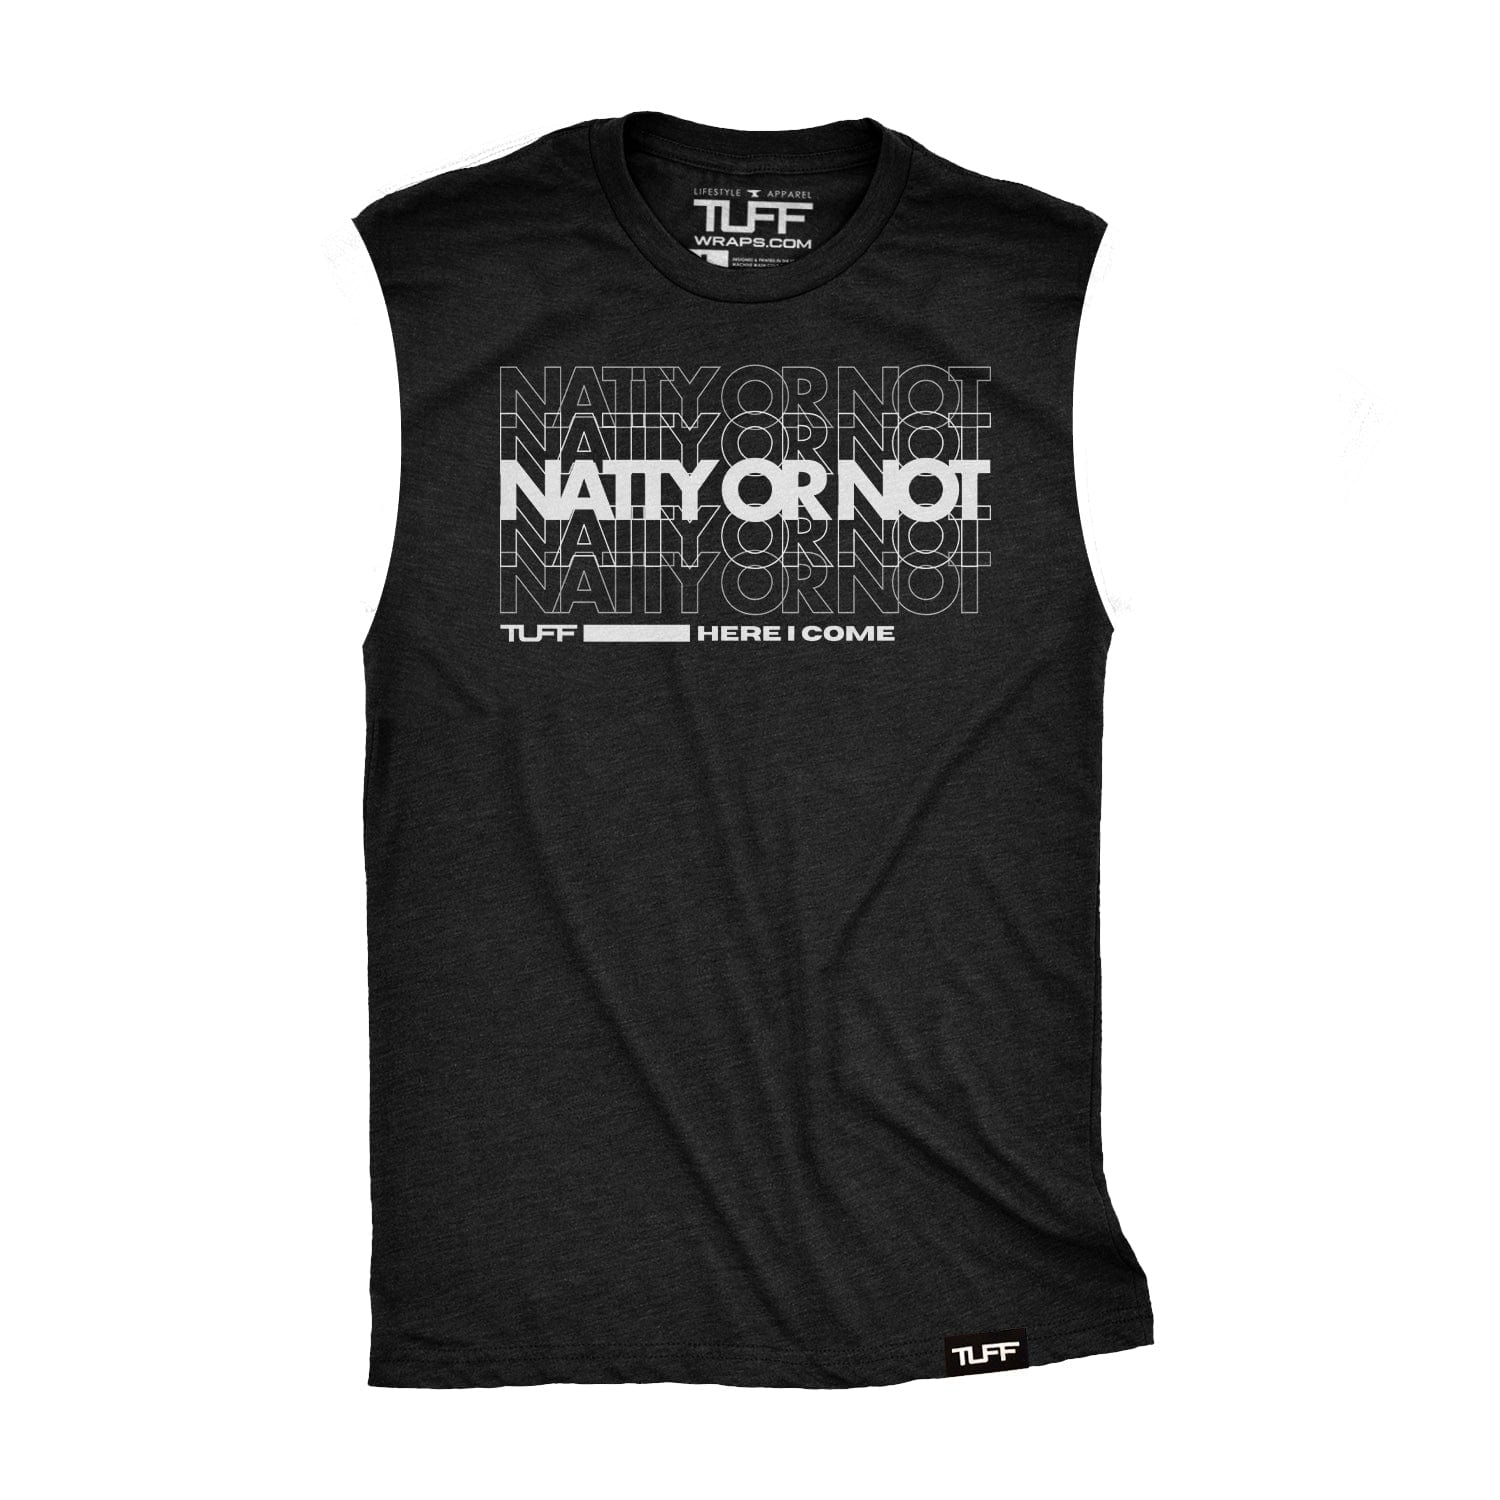 Natty Or Not Raw Edge Muscle Tank TuffWraps.com